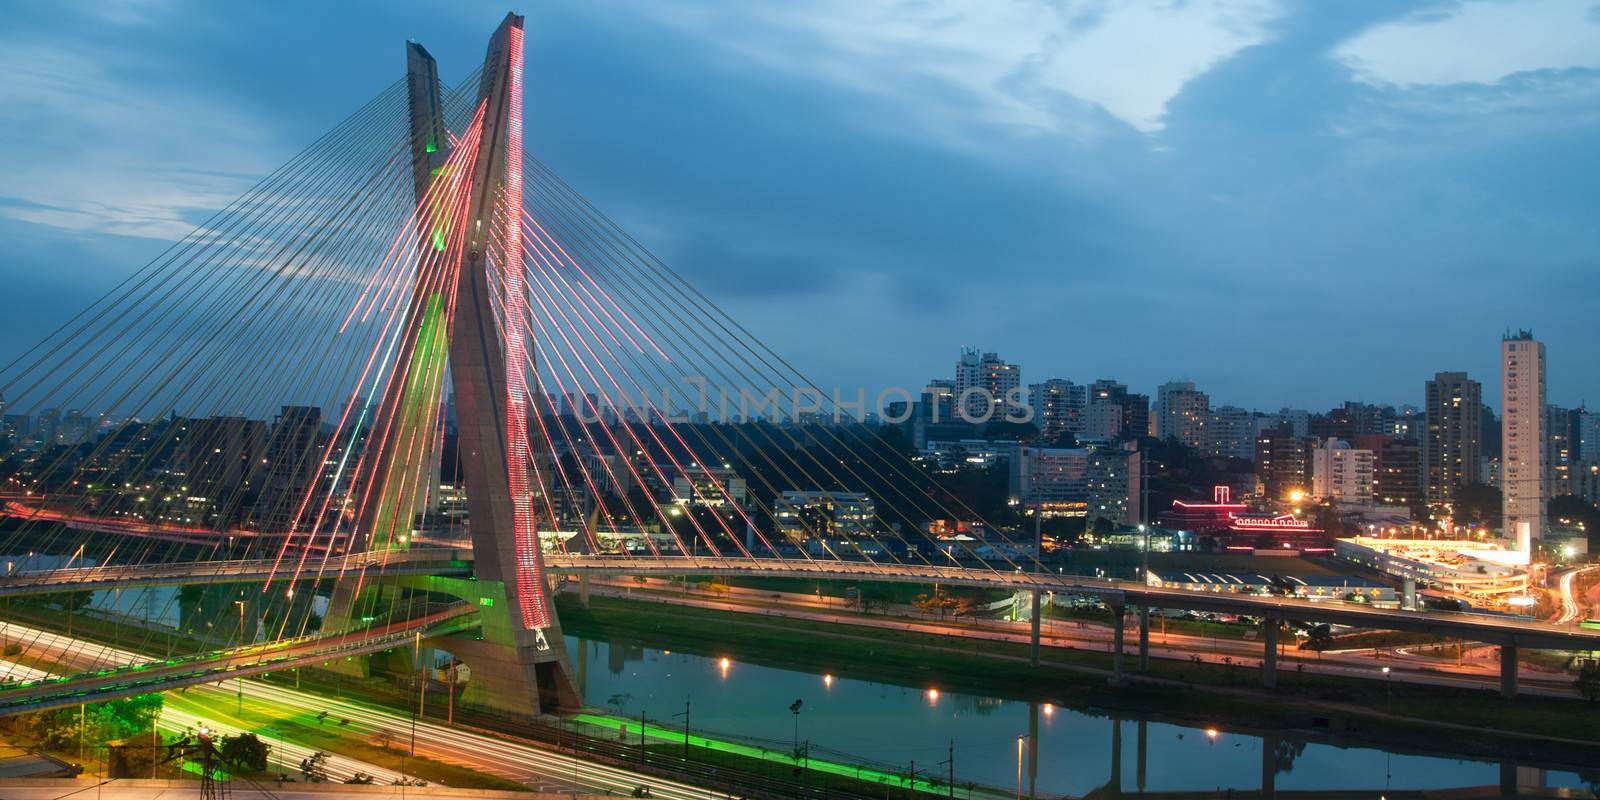 Scenic view of Octavio Frias de Oliveira bridge illuminated at night over Pinheiros river in Sao Paulo, Brazil.